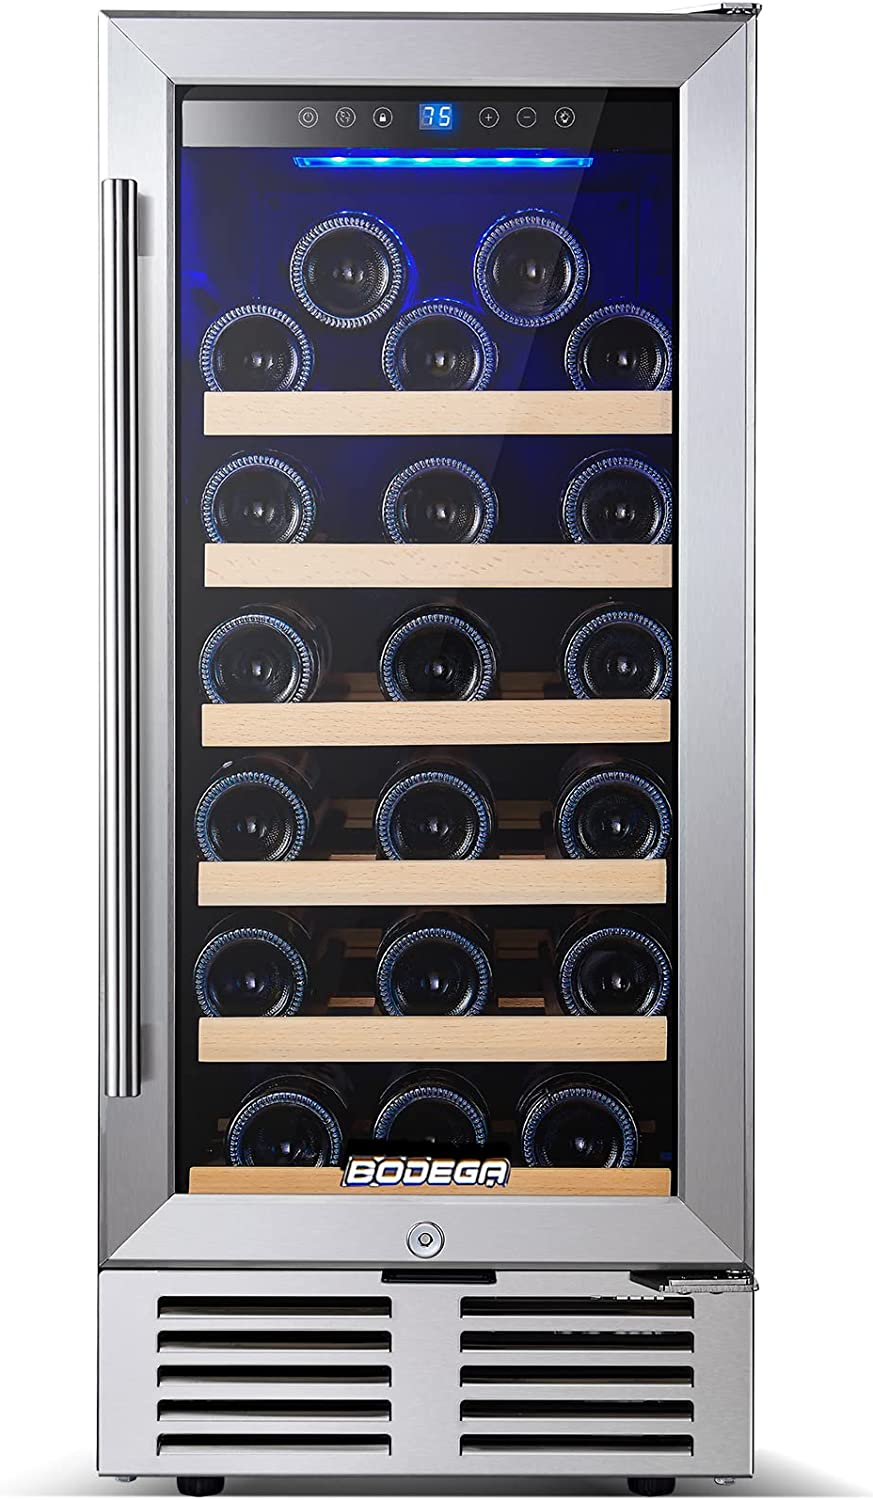 BODEGA High-Efficiency Quiet Wine Cooler Refrigerator